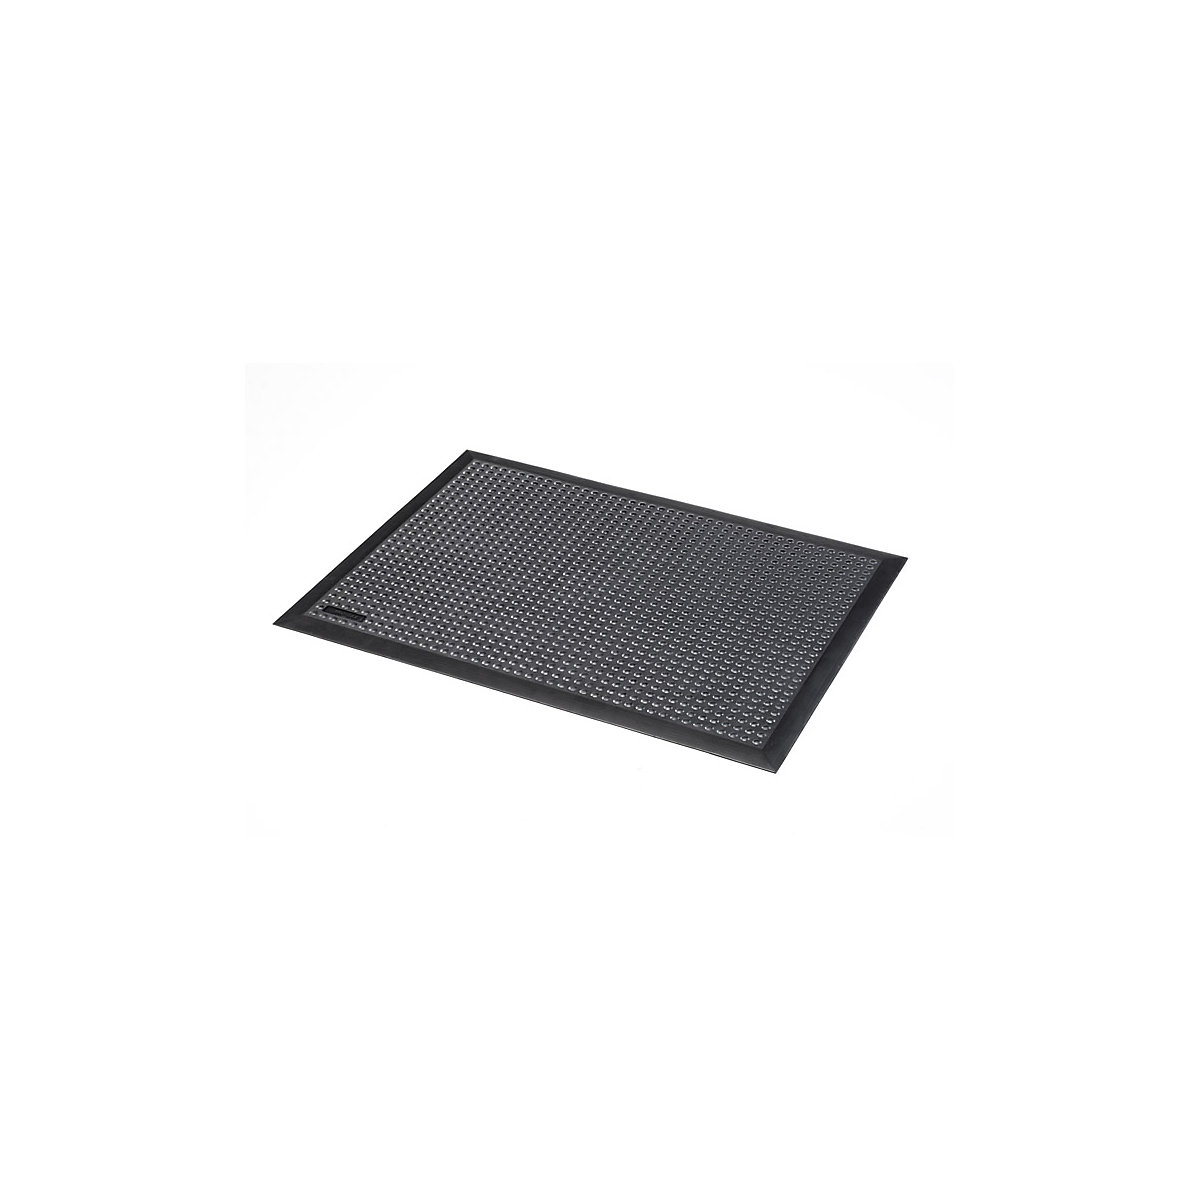 Skystep nitrile rubber workstation matting – NOTRAX, black, LxWxH 1200 x 900 x 13 mm-3